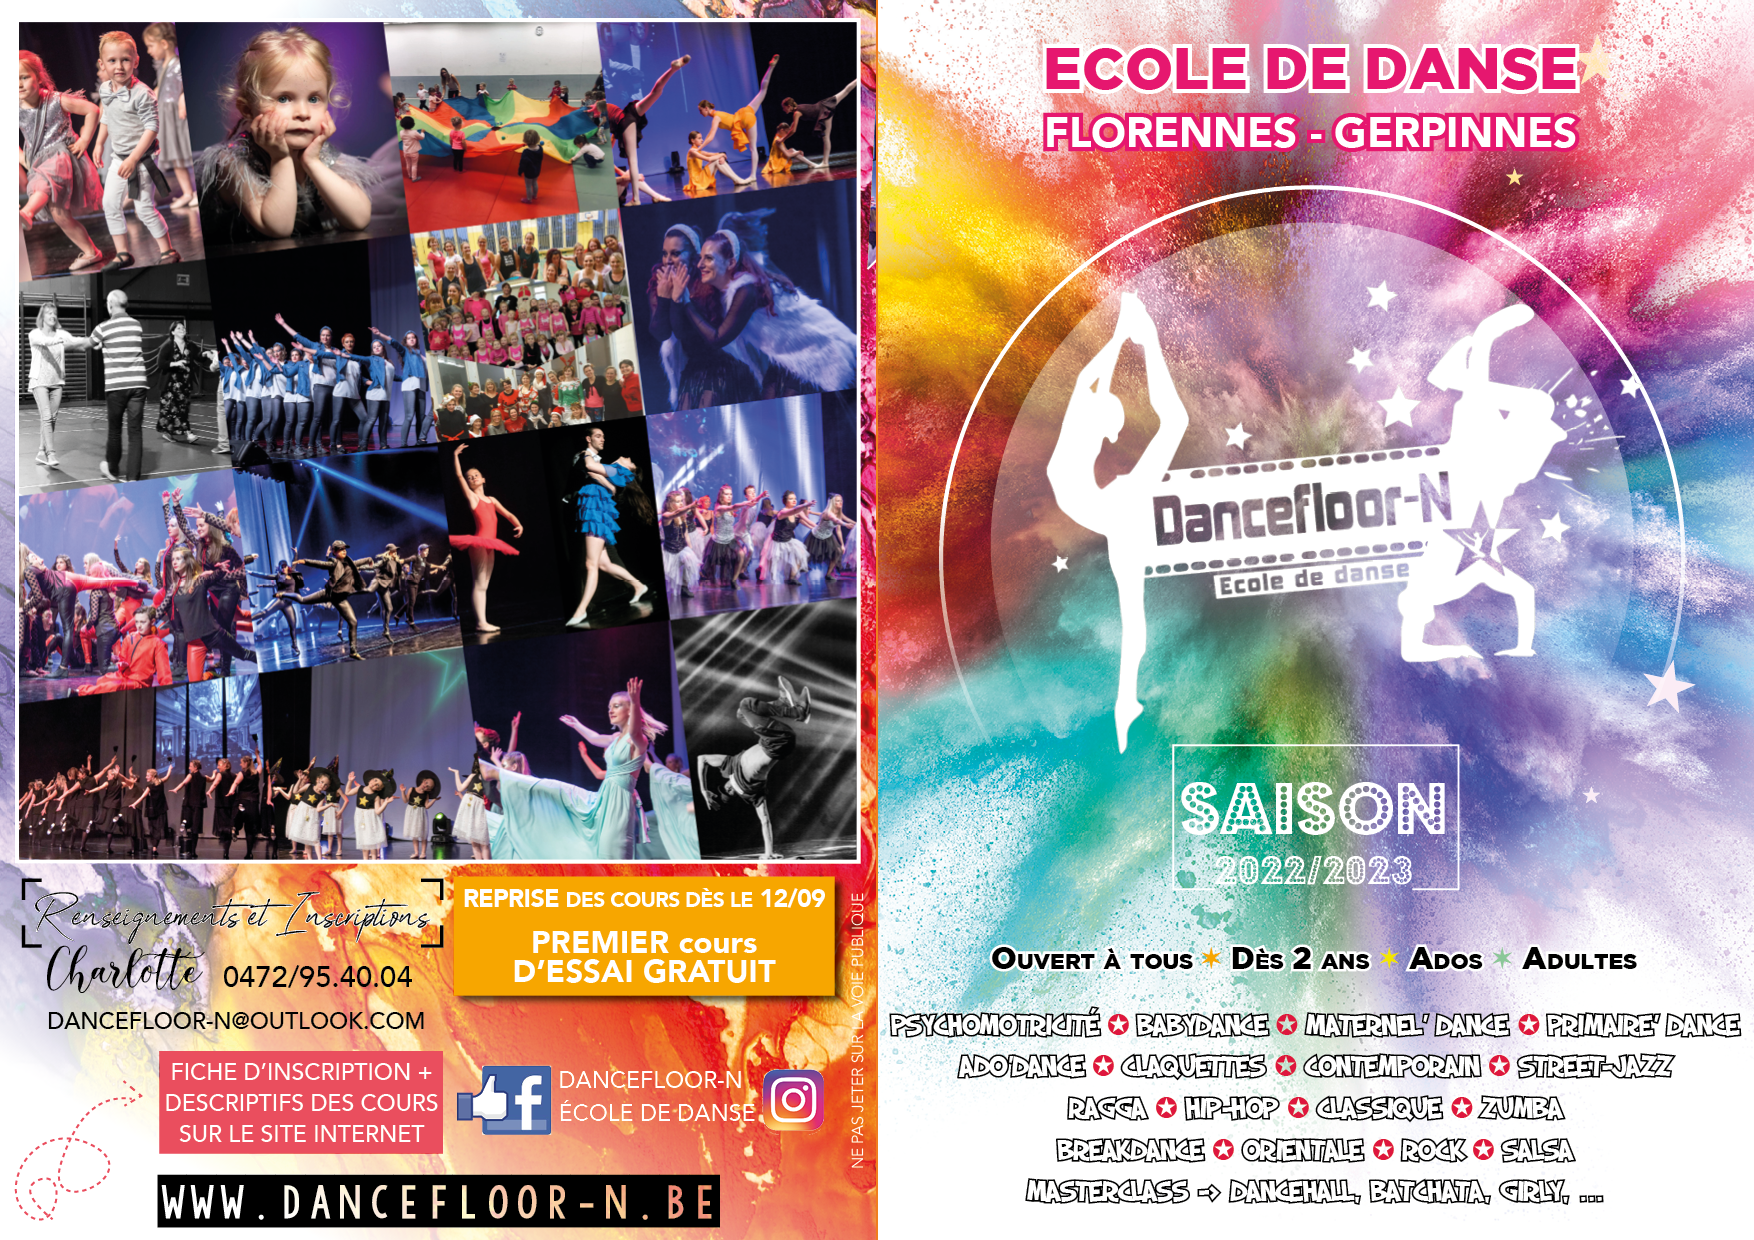 Dancefloor-n - Horaire 2022-2023